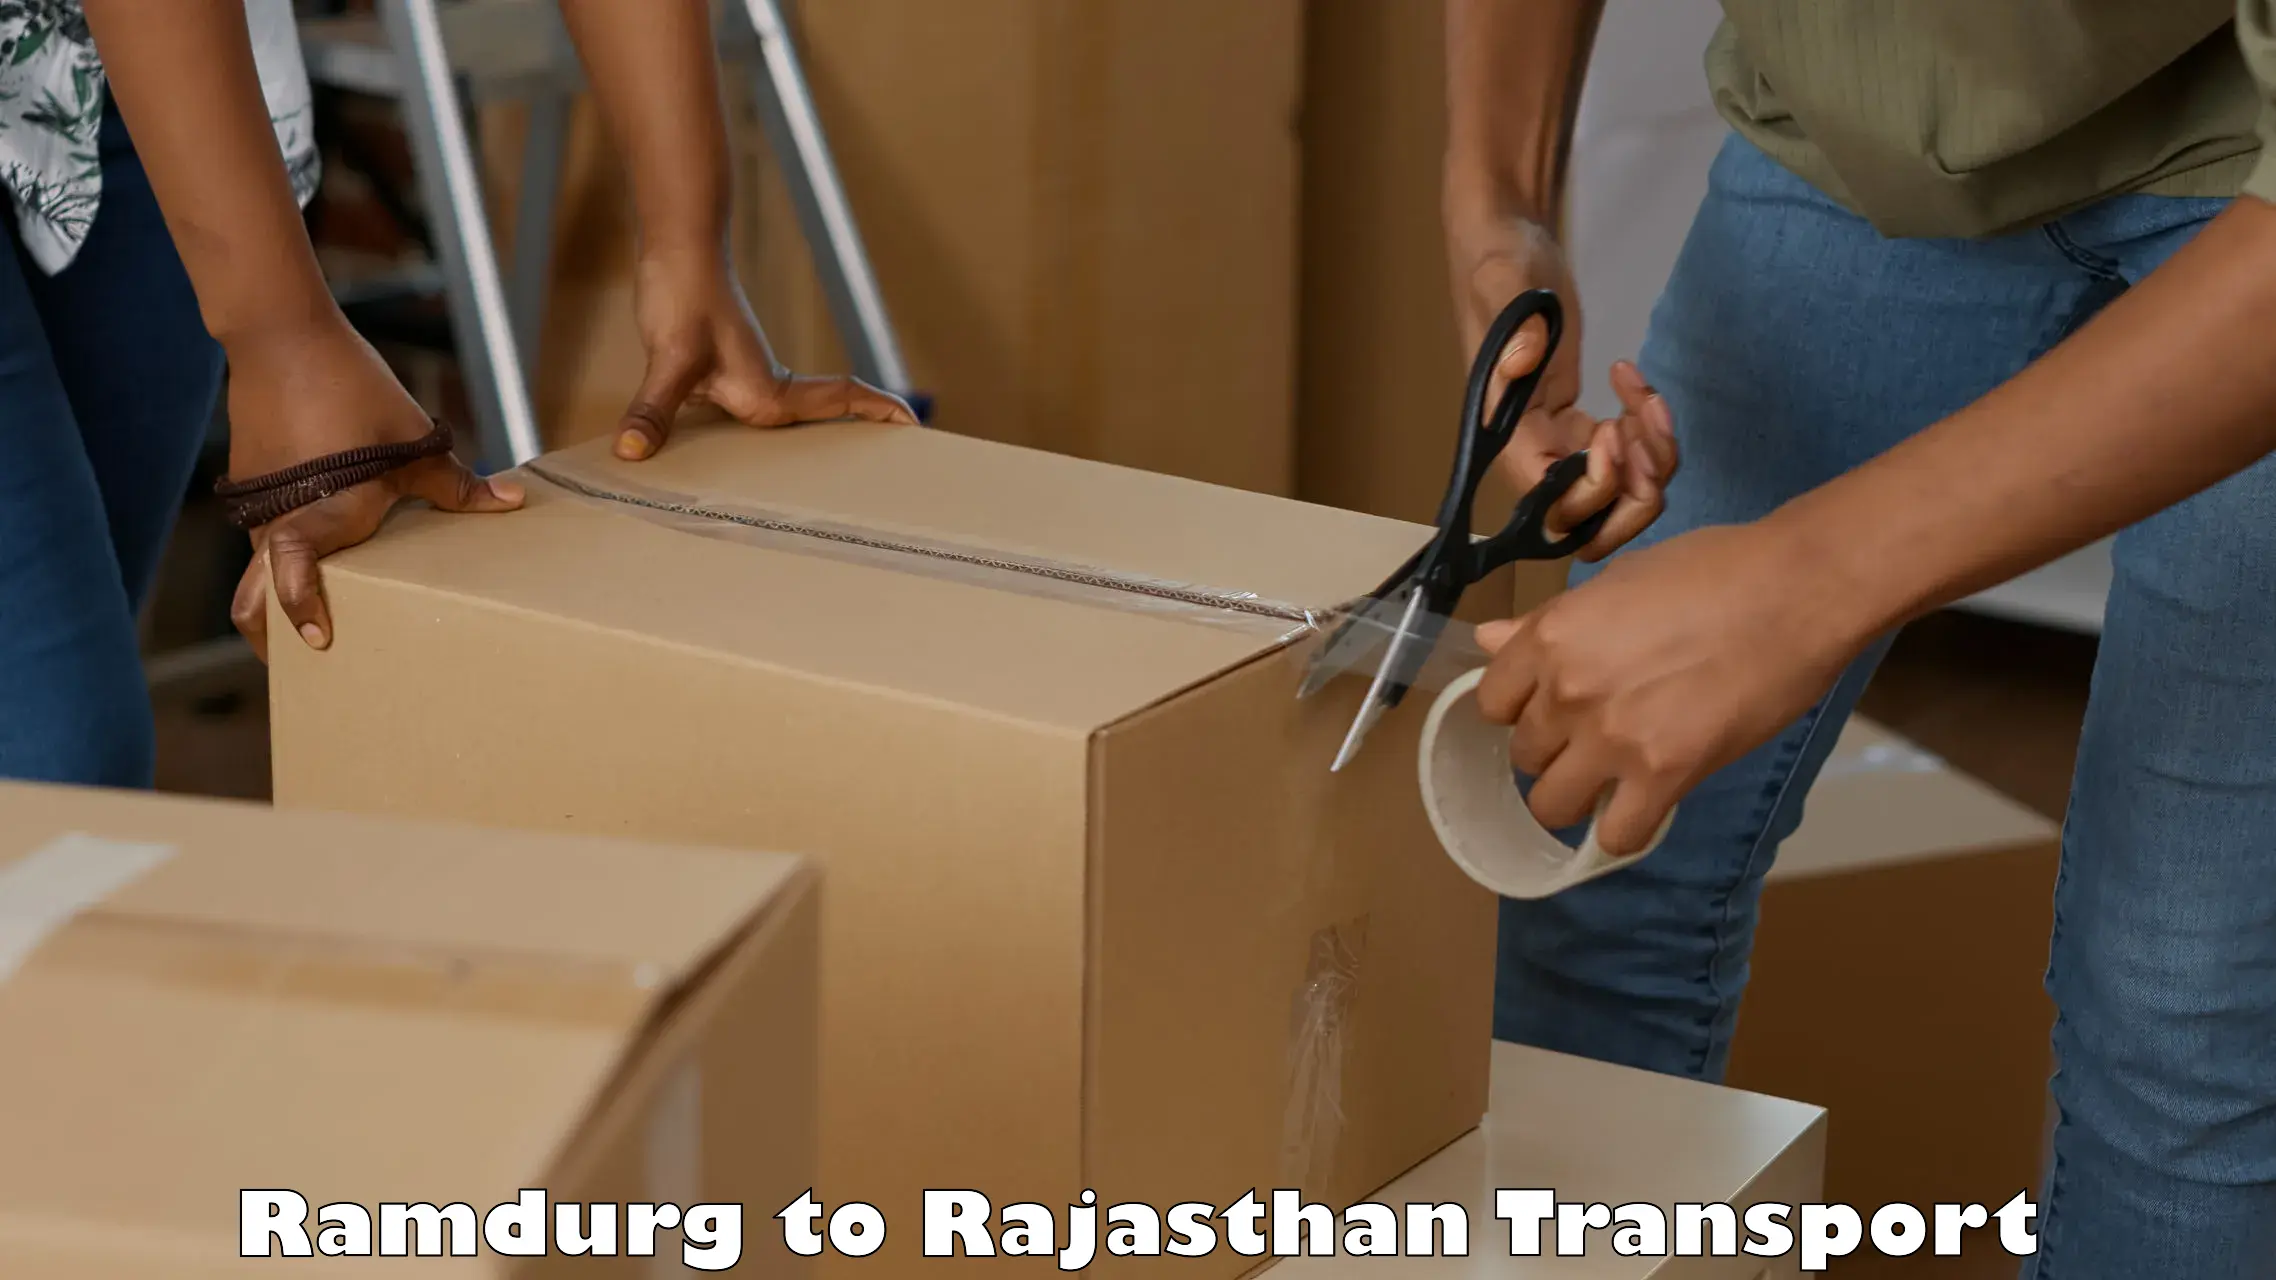 Truck transport companies in India Ramdurg to Pokhran